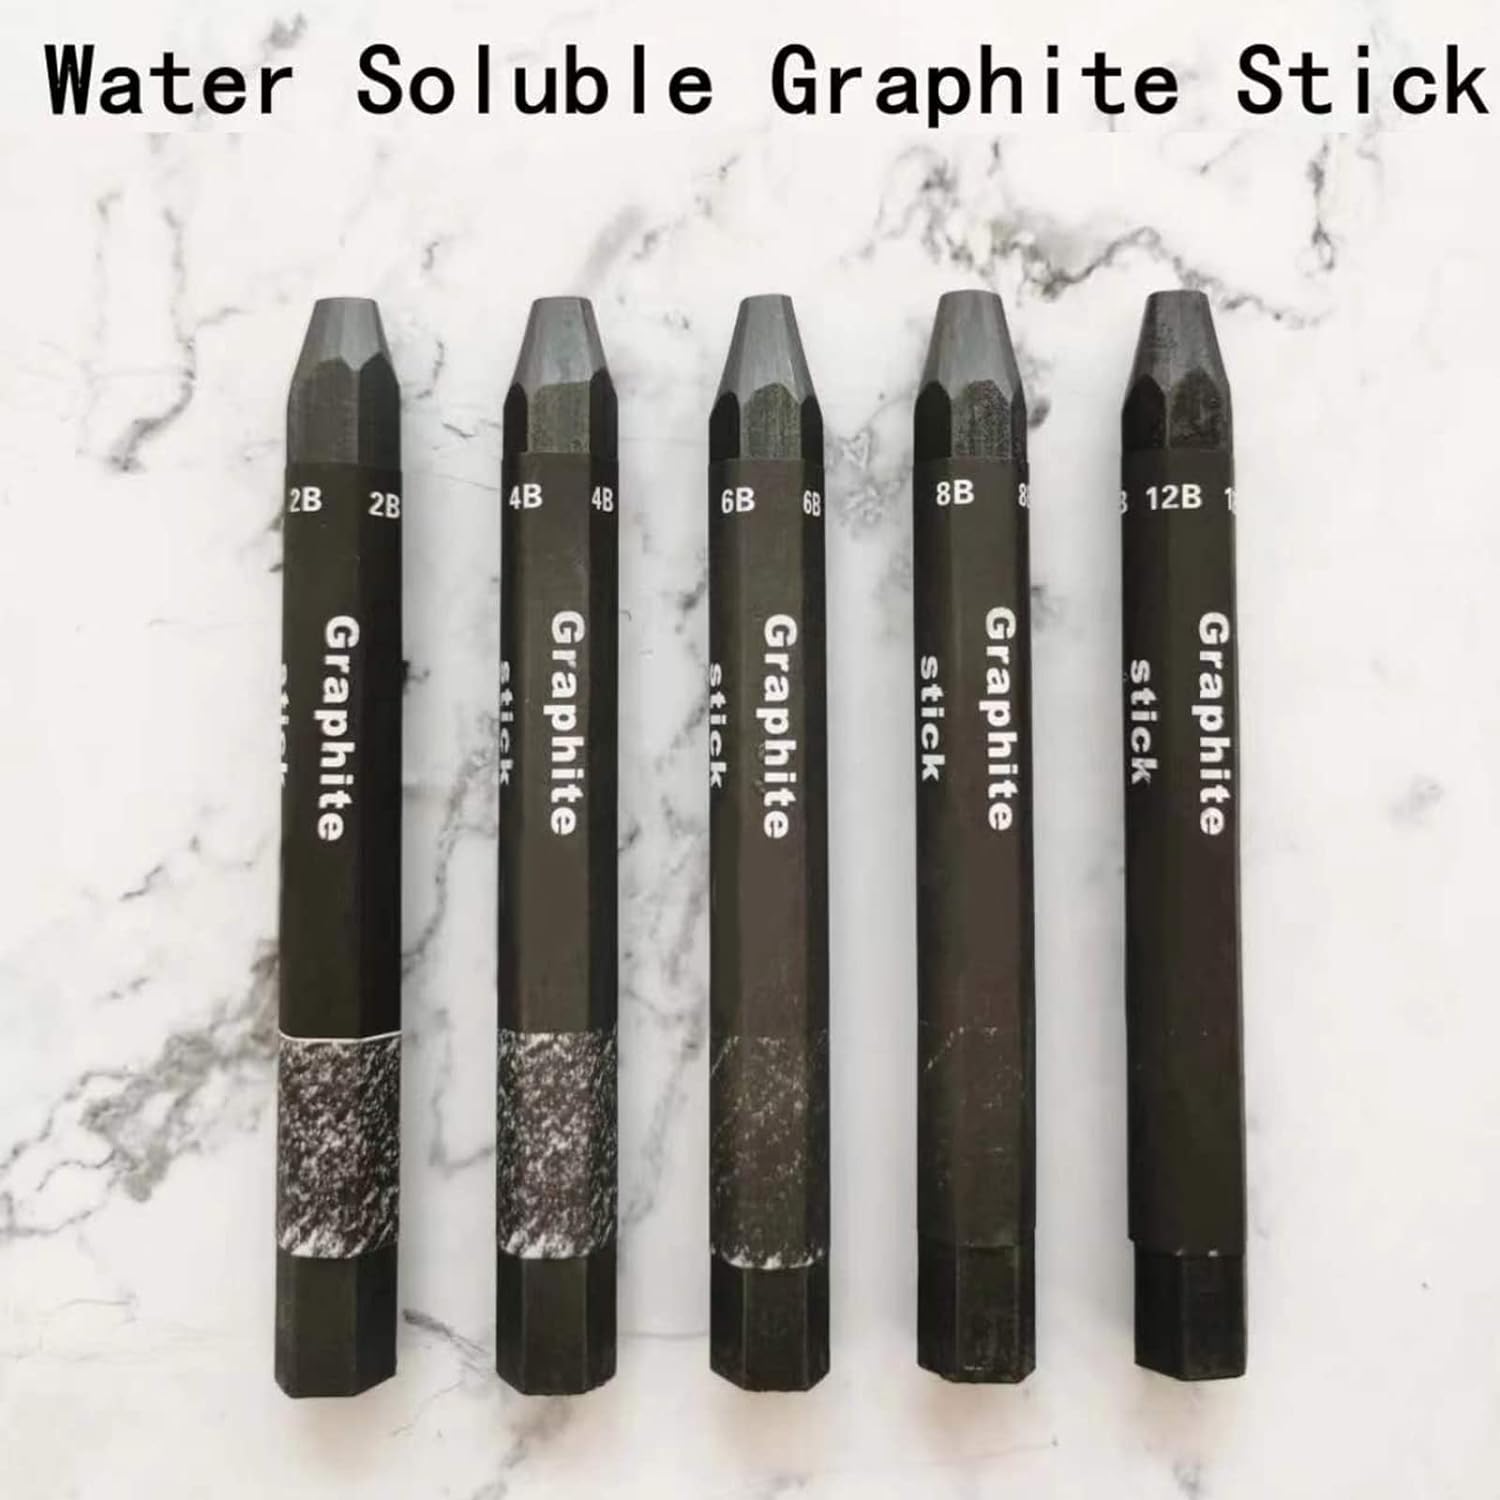 5pcs Water Soluble Graphite Sticks 2B 4B 6B 8B 12B